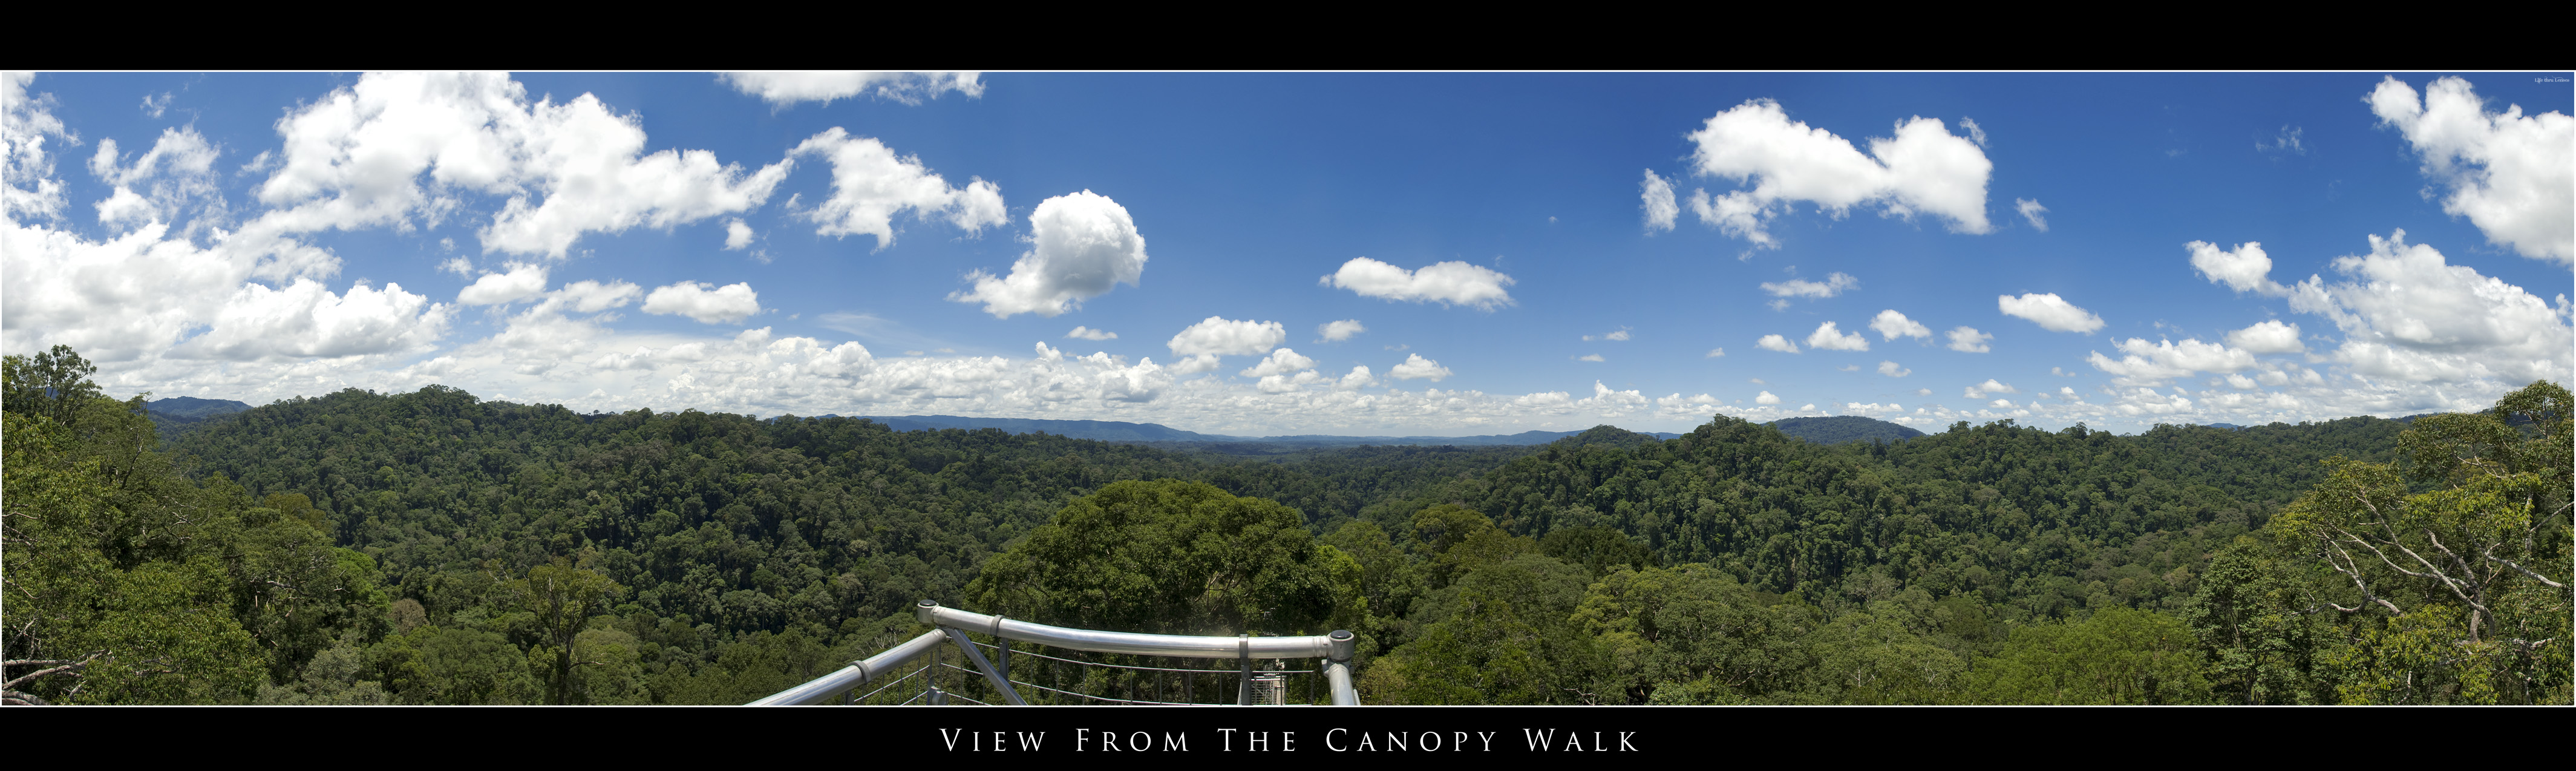 Canopy Walk Panorama